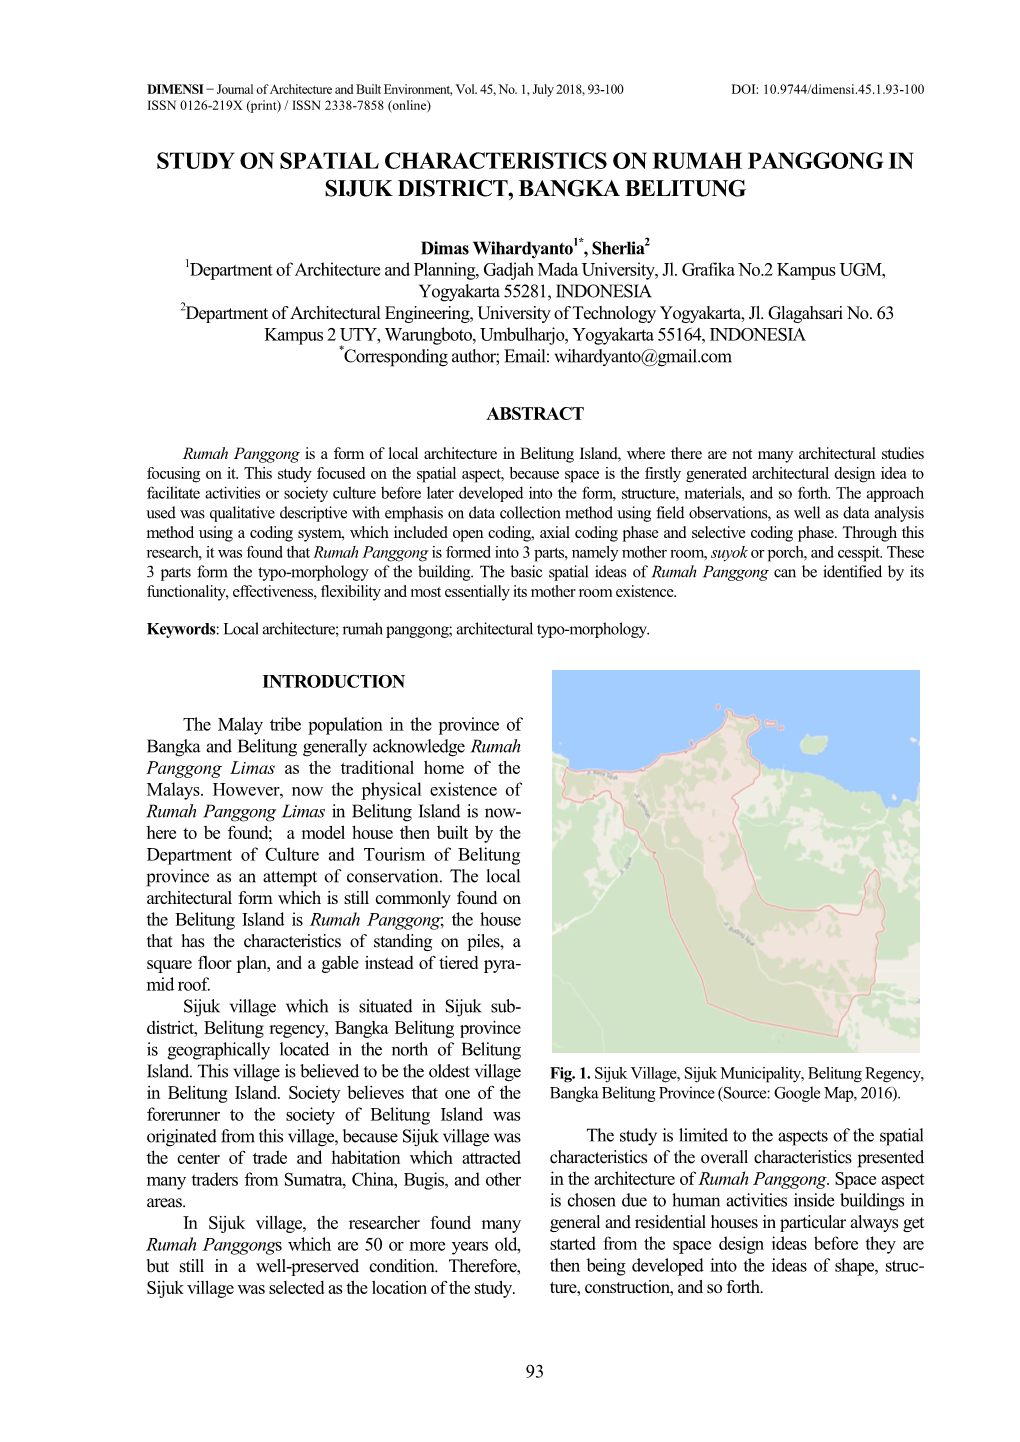 Study on Spatial Characteristics on Rumah Panggong in Sijuk District, Bangka Belitung